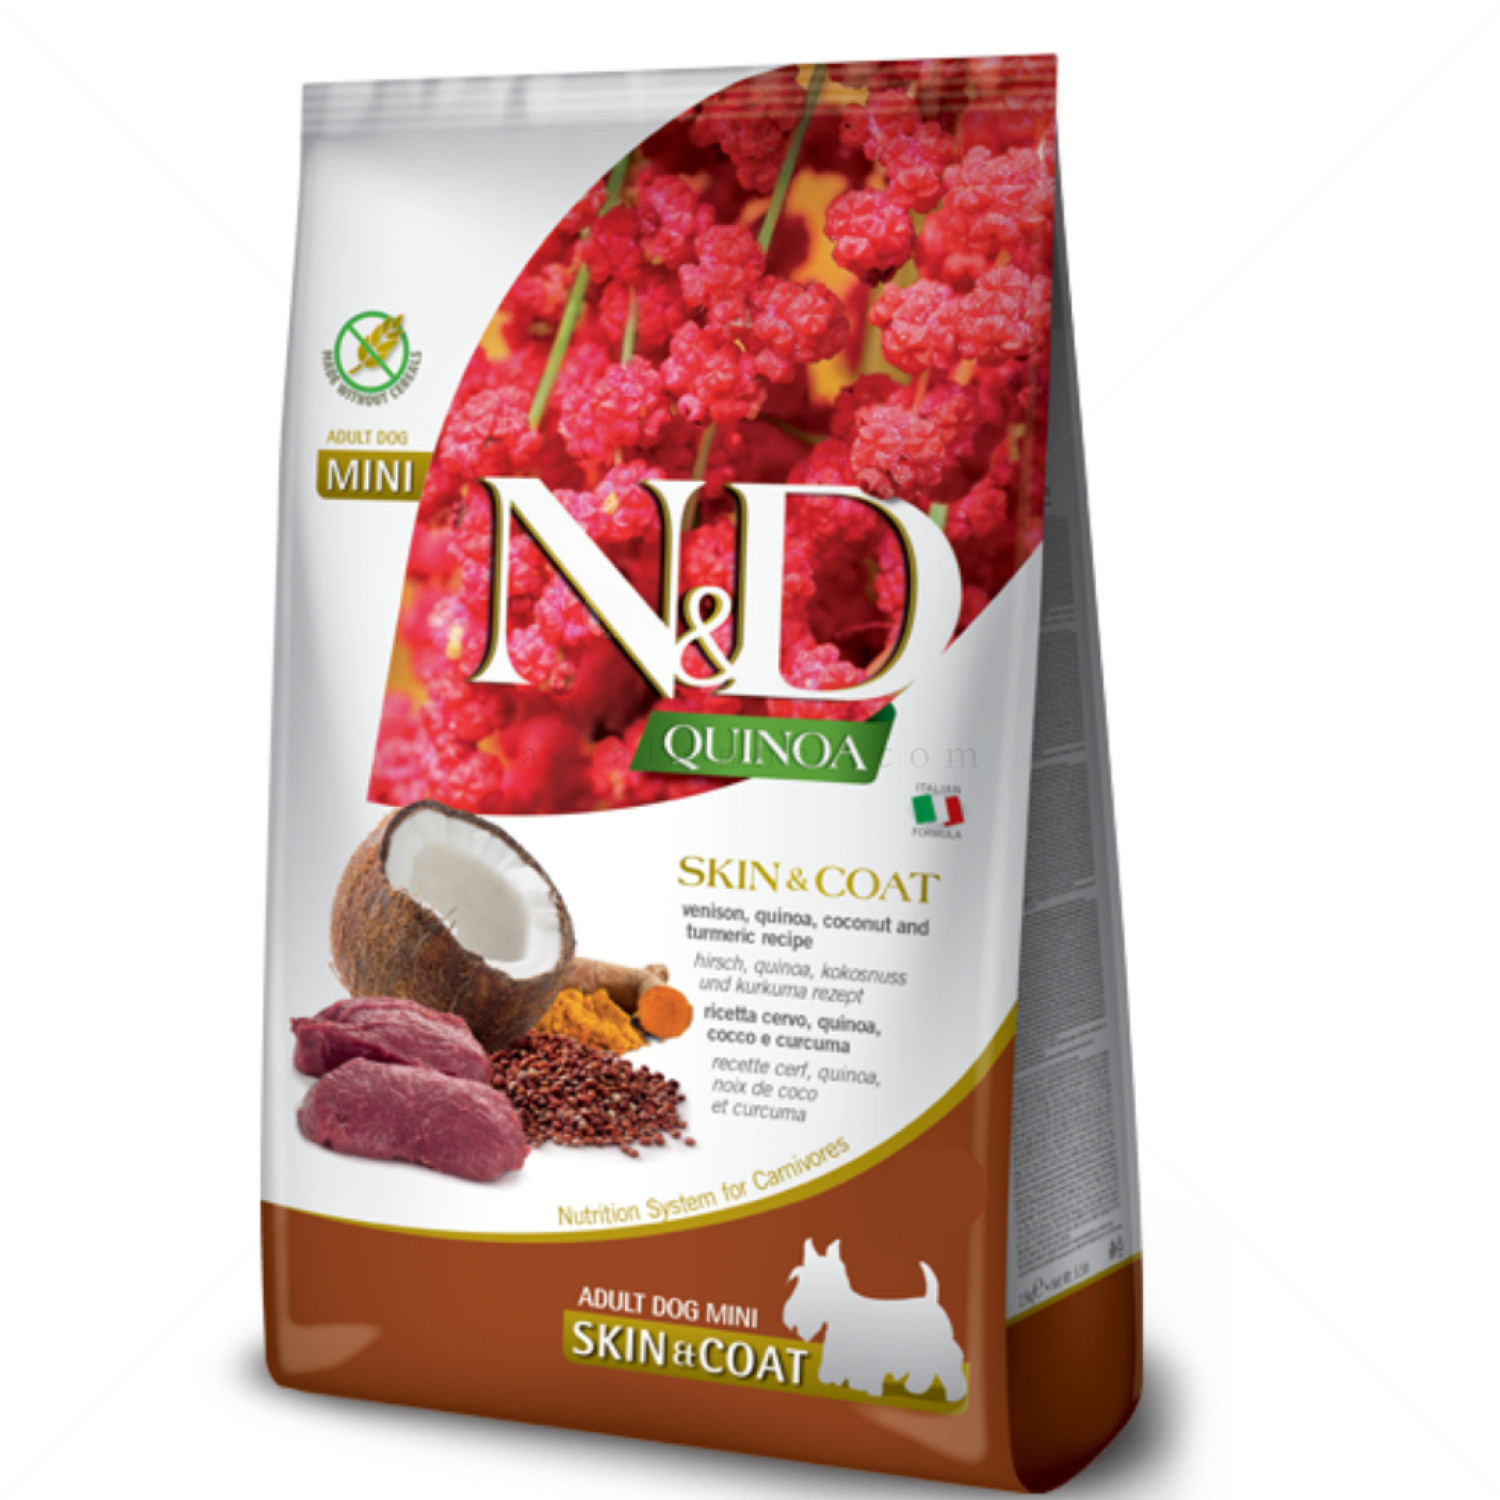 N&D Dog 0.800 кг Quinoa Mini Skin&Coat Venison, coconut and turmeric